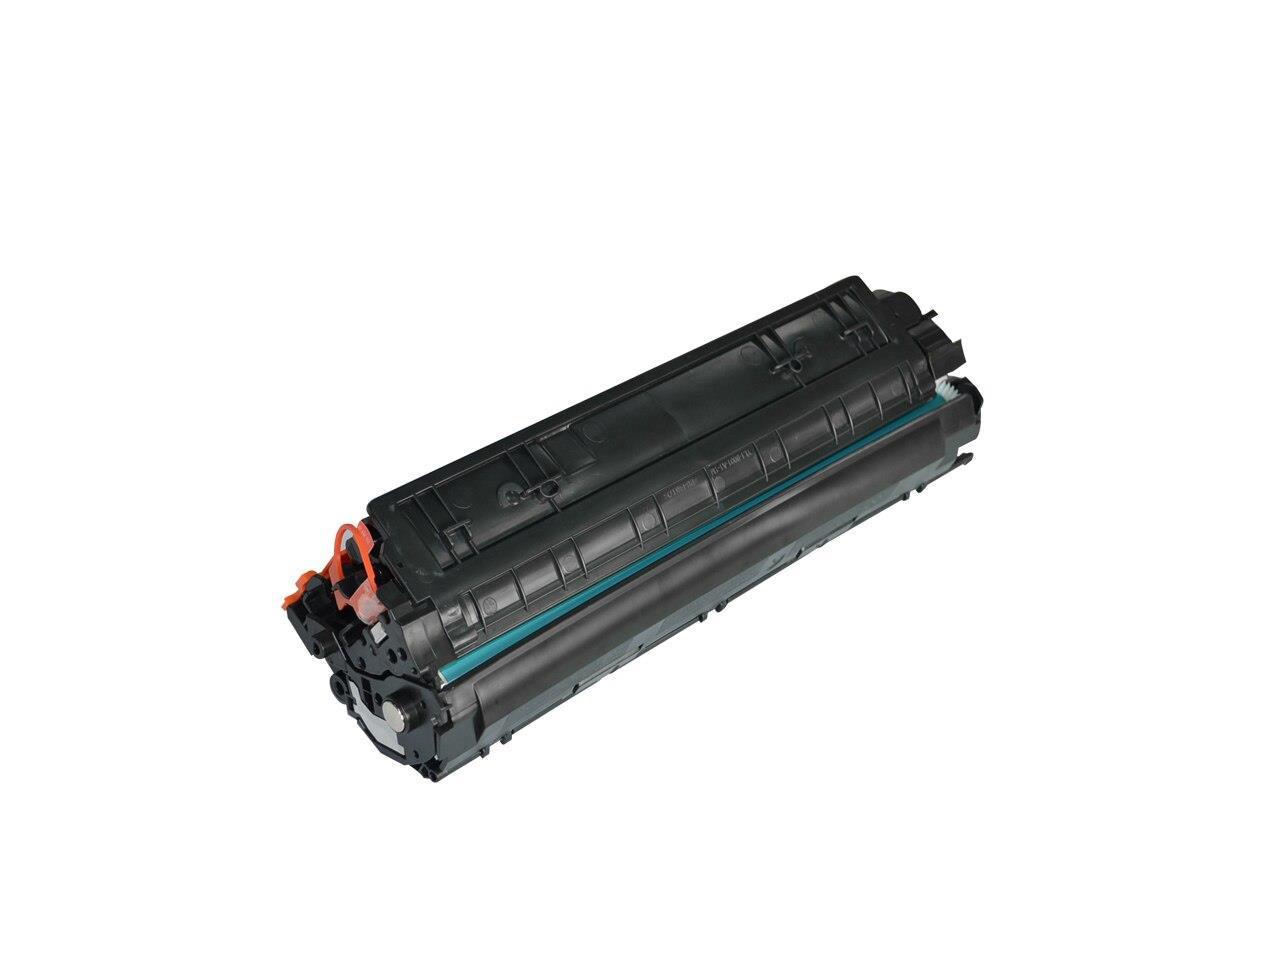 Toner Cartridges For HP P1005 P1006 Refillable Printer Full Toner Cartridges For CANON LBP-3018 ...